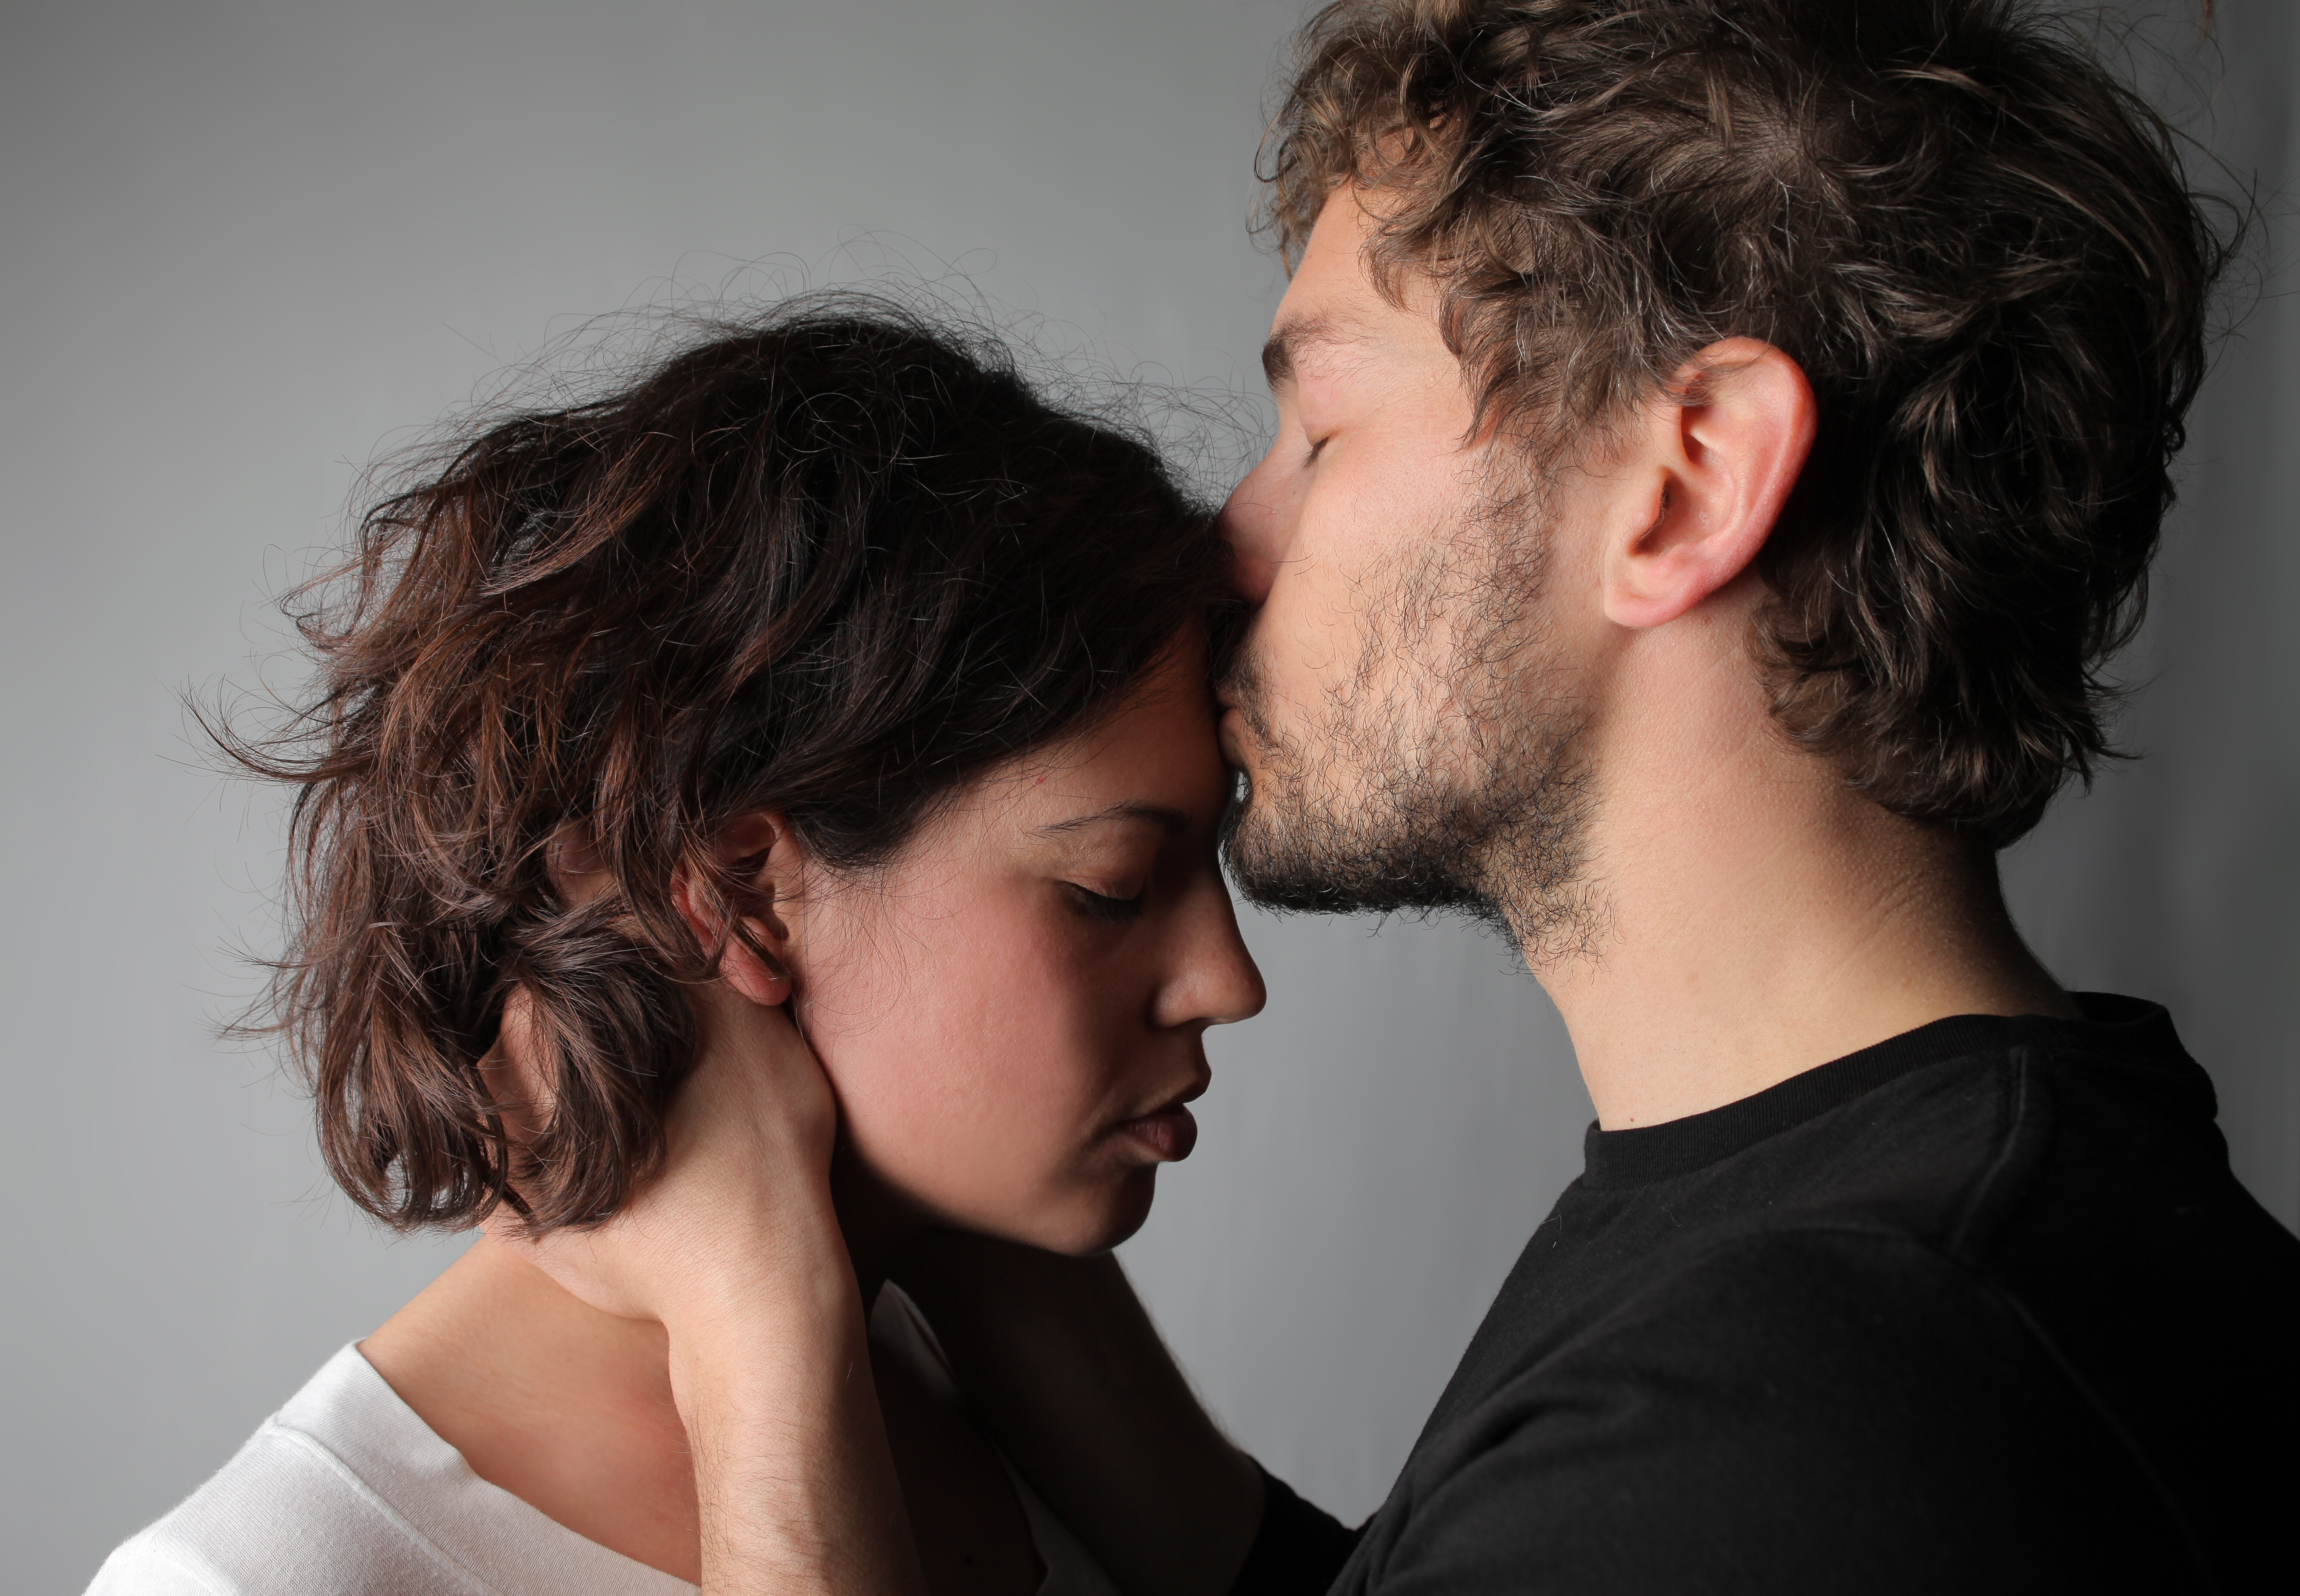 Boyfriend comforts young female | Source: Shutterstock